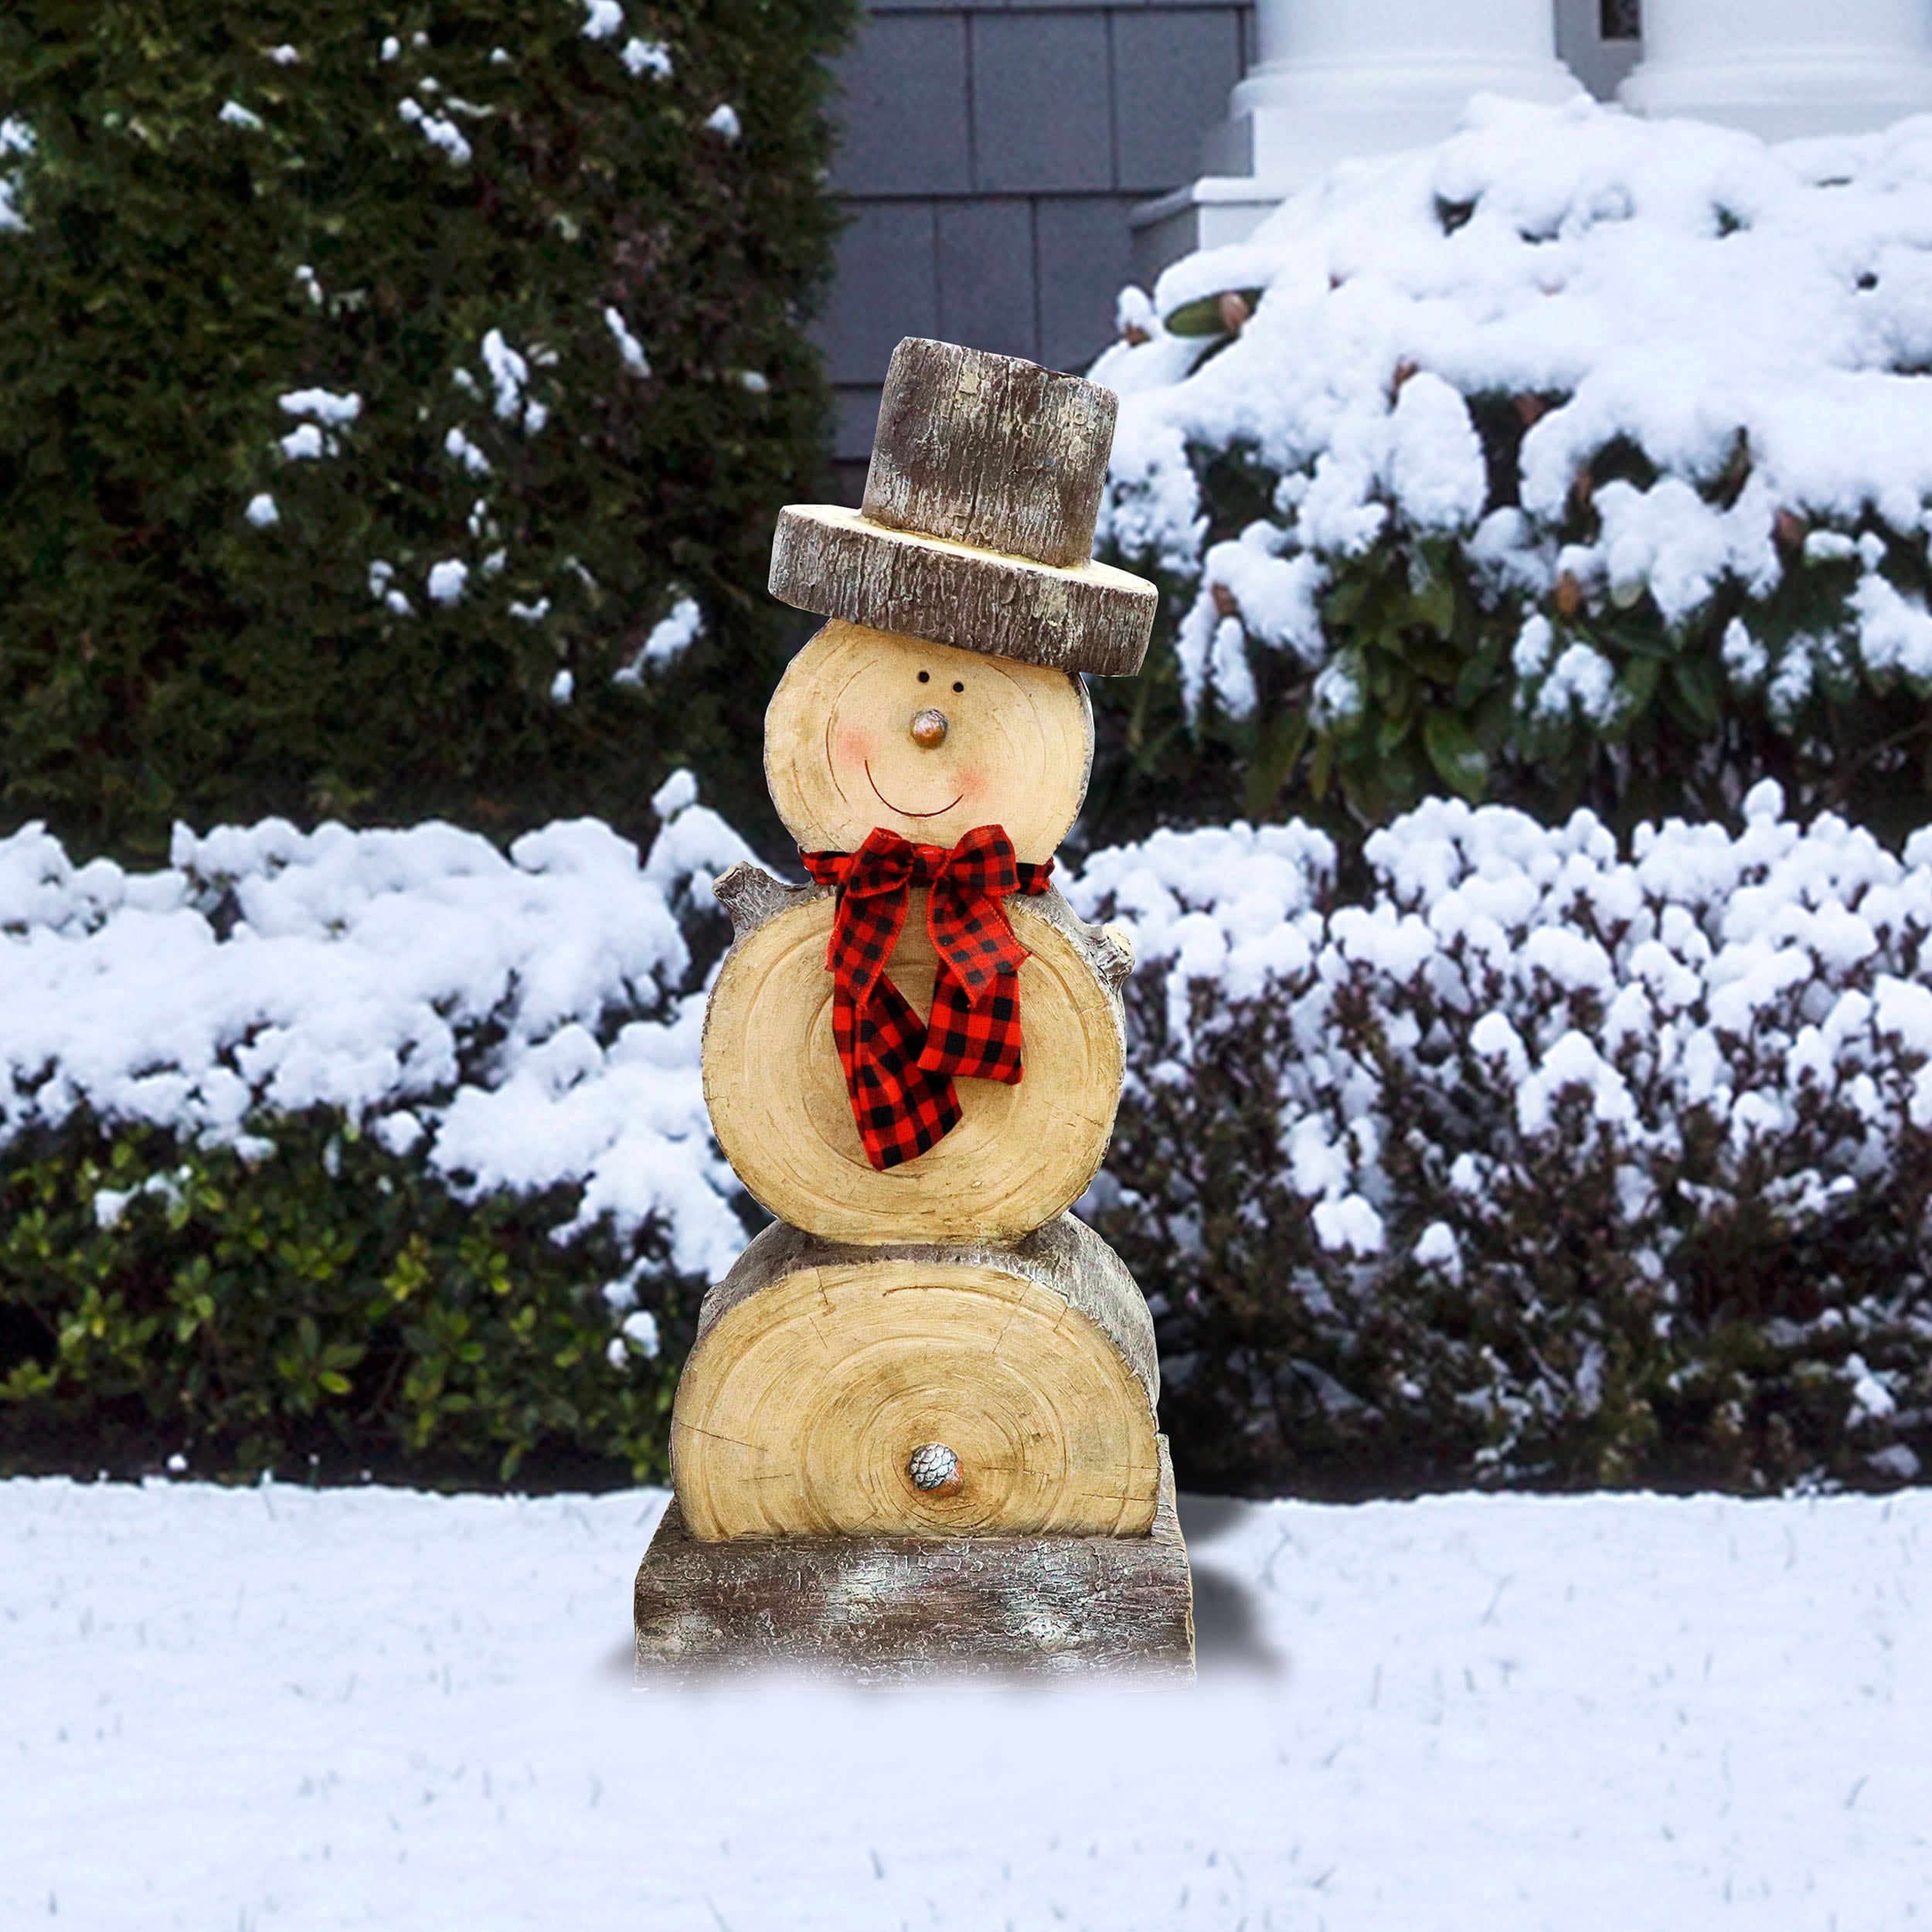 SnowBro's Illuminated Snowman Holiday Statue: Giant - DB383115